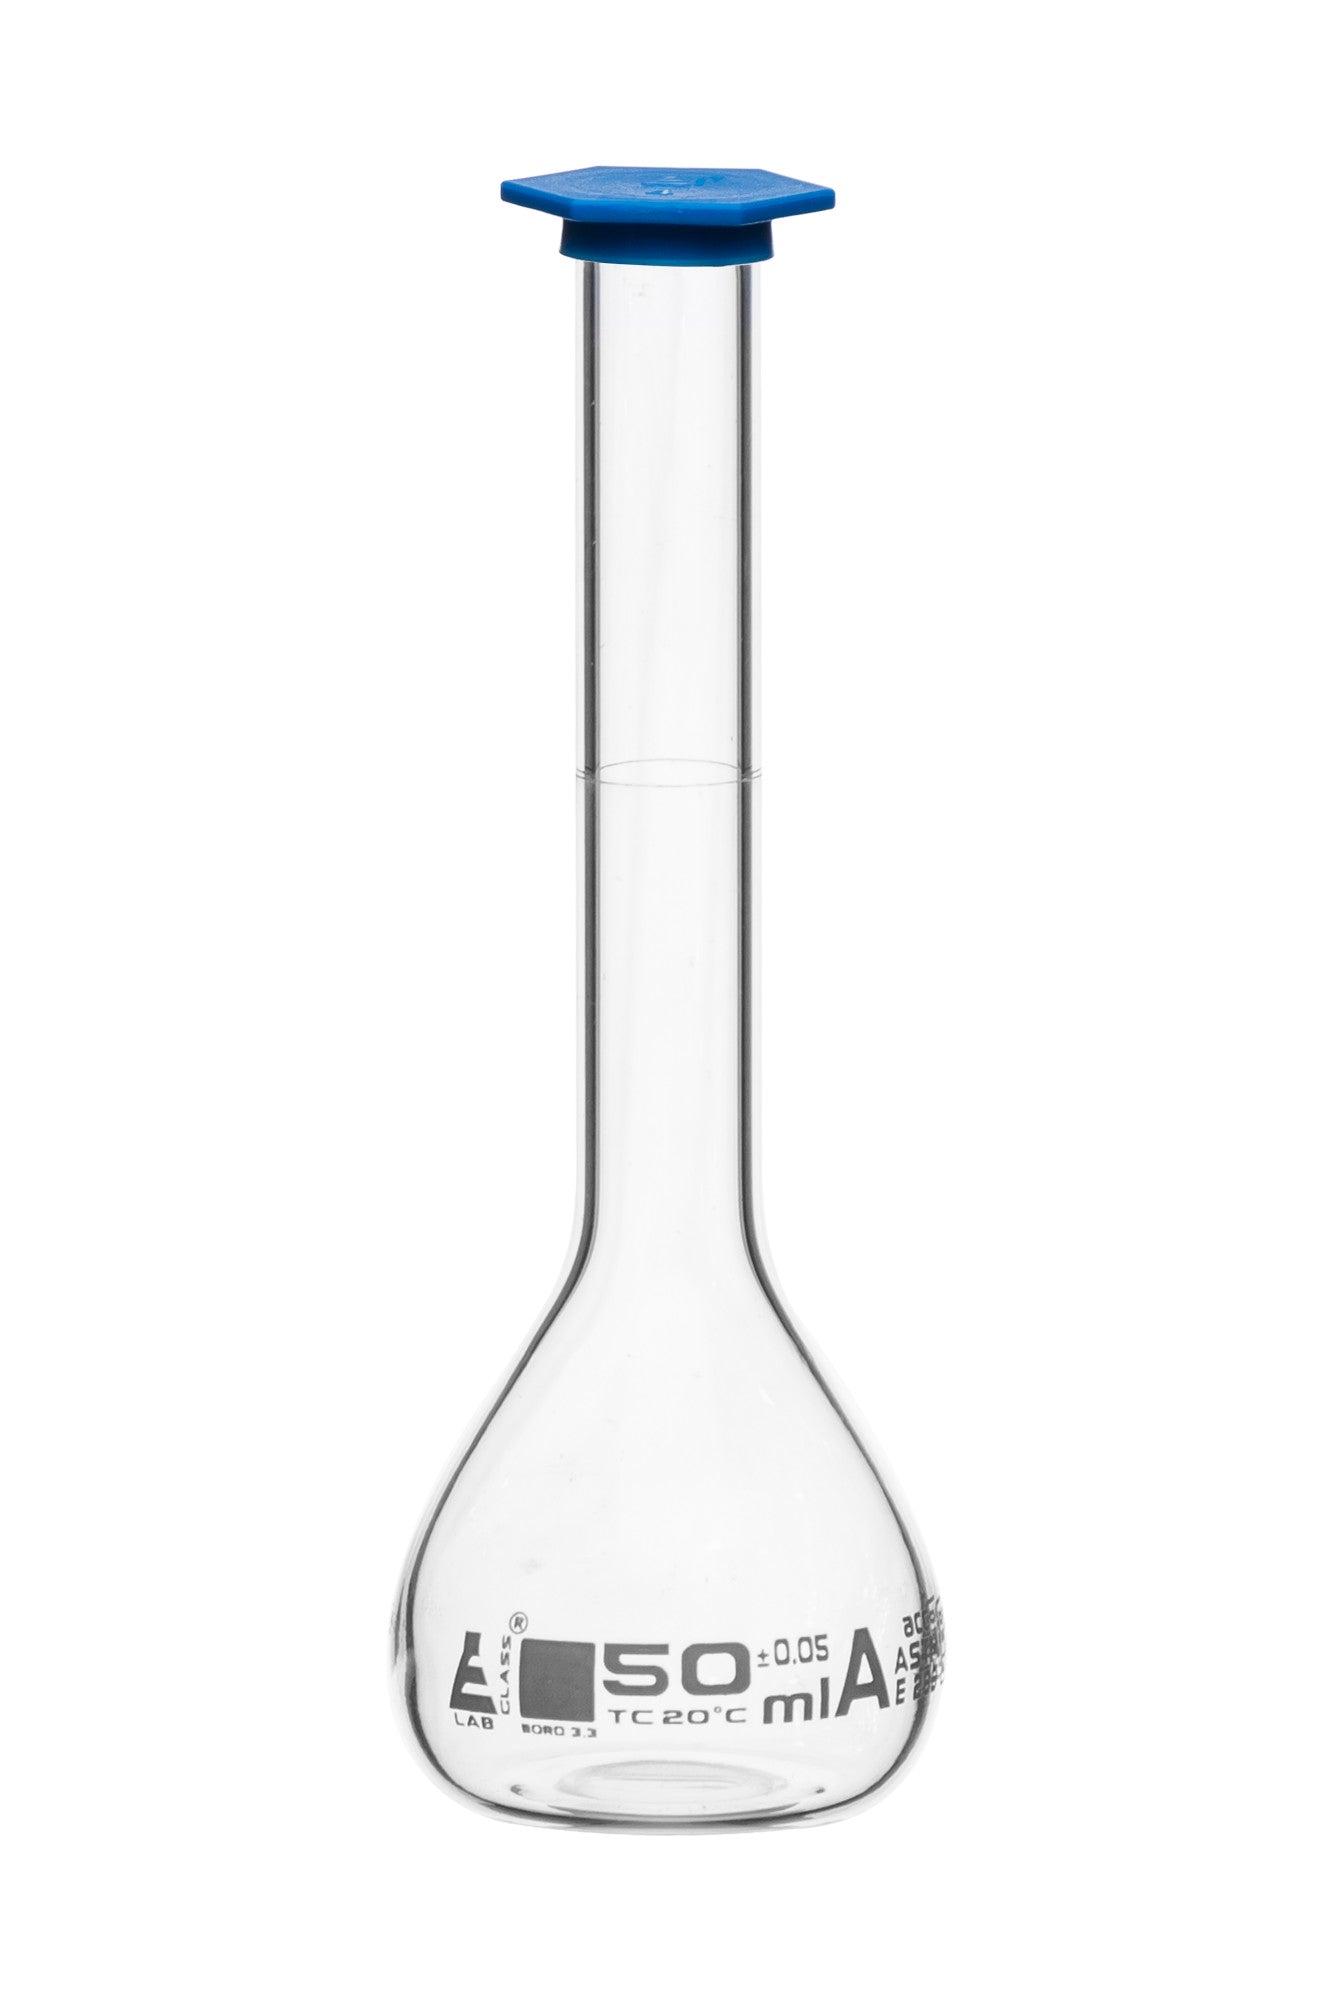 Borosilicate Volumetric Flask with Polyethylene Snap Cap, 50 ml, Class A, White Print, ASTM, Autoclavable